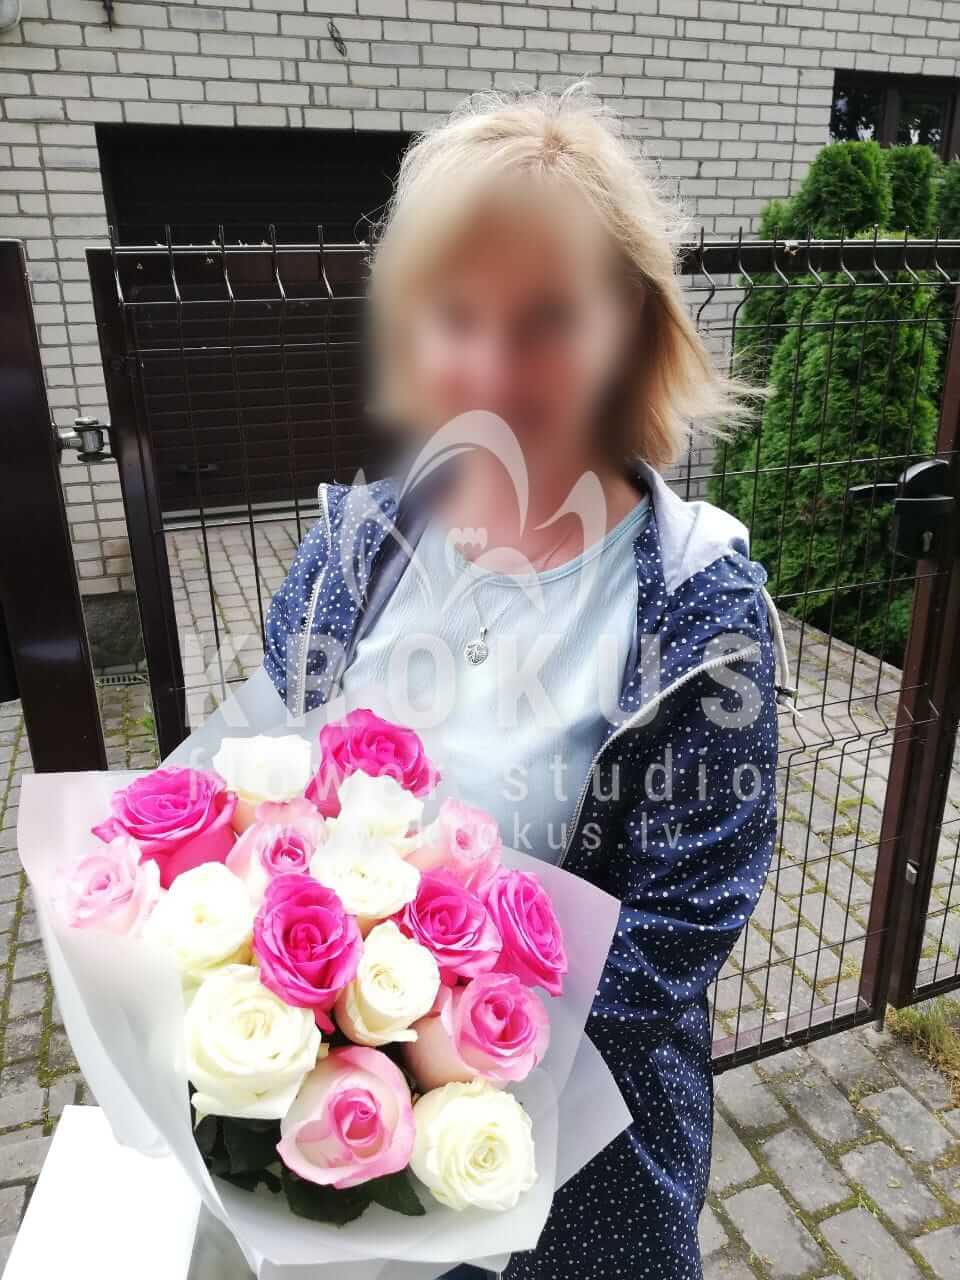 Deliver flowers to Ogre (pink roseswhite rosesyellow rosesorange rosesred roses)